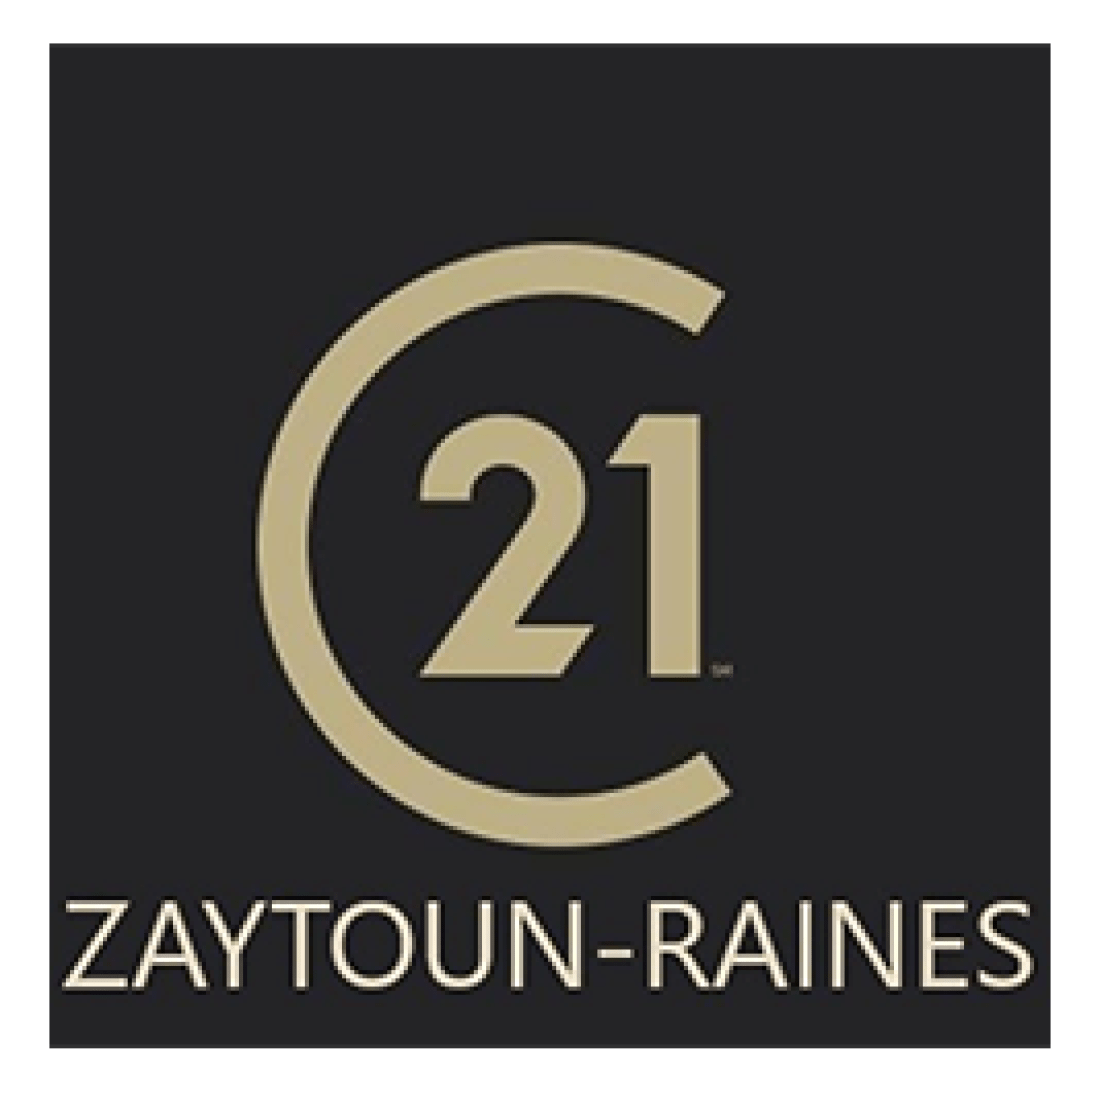 CFA sponsor Century 21 Zaytoun-Raines logo